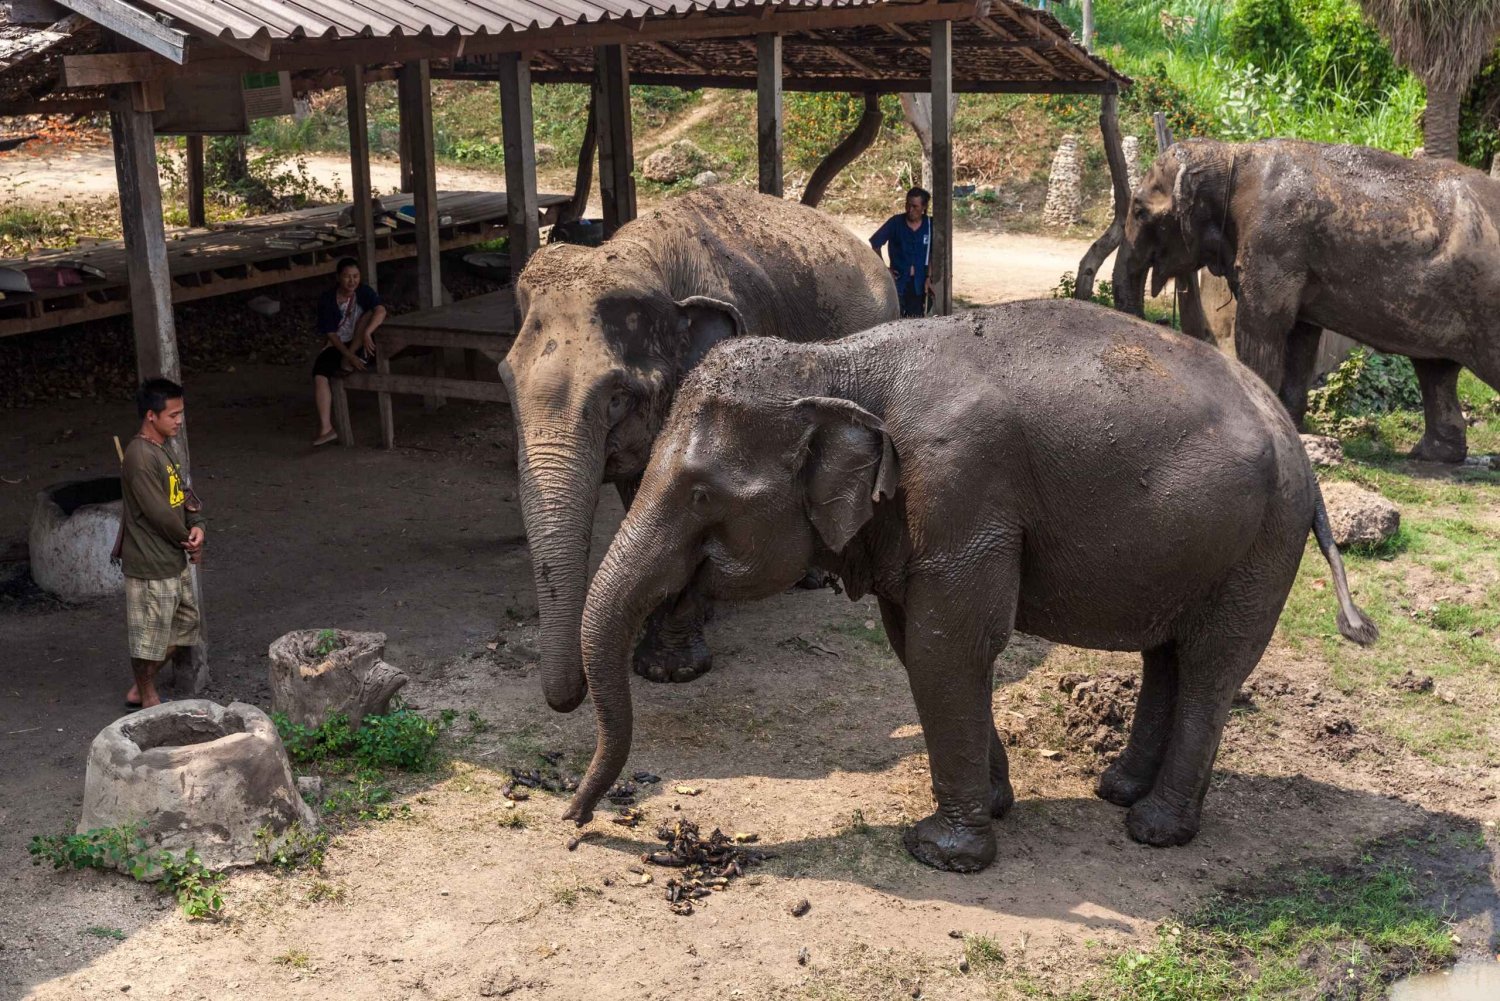 From Bangkok: Elephant Sanctuary and Kanchanaburi Tour